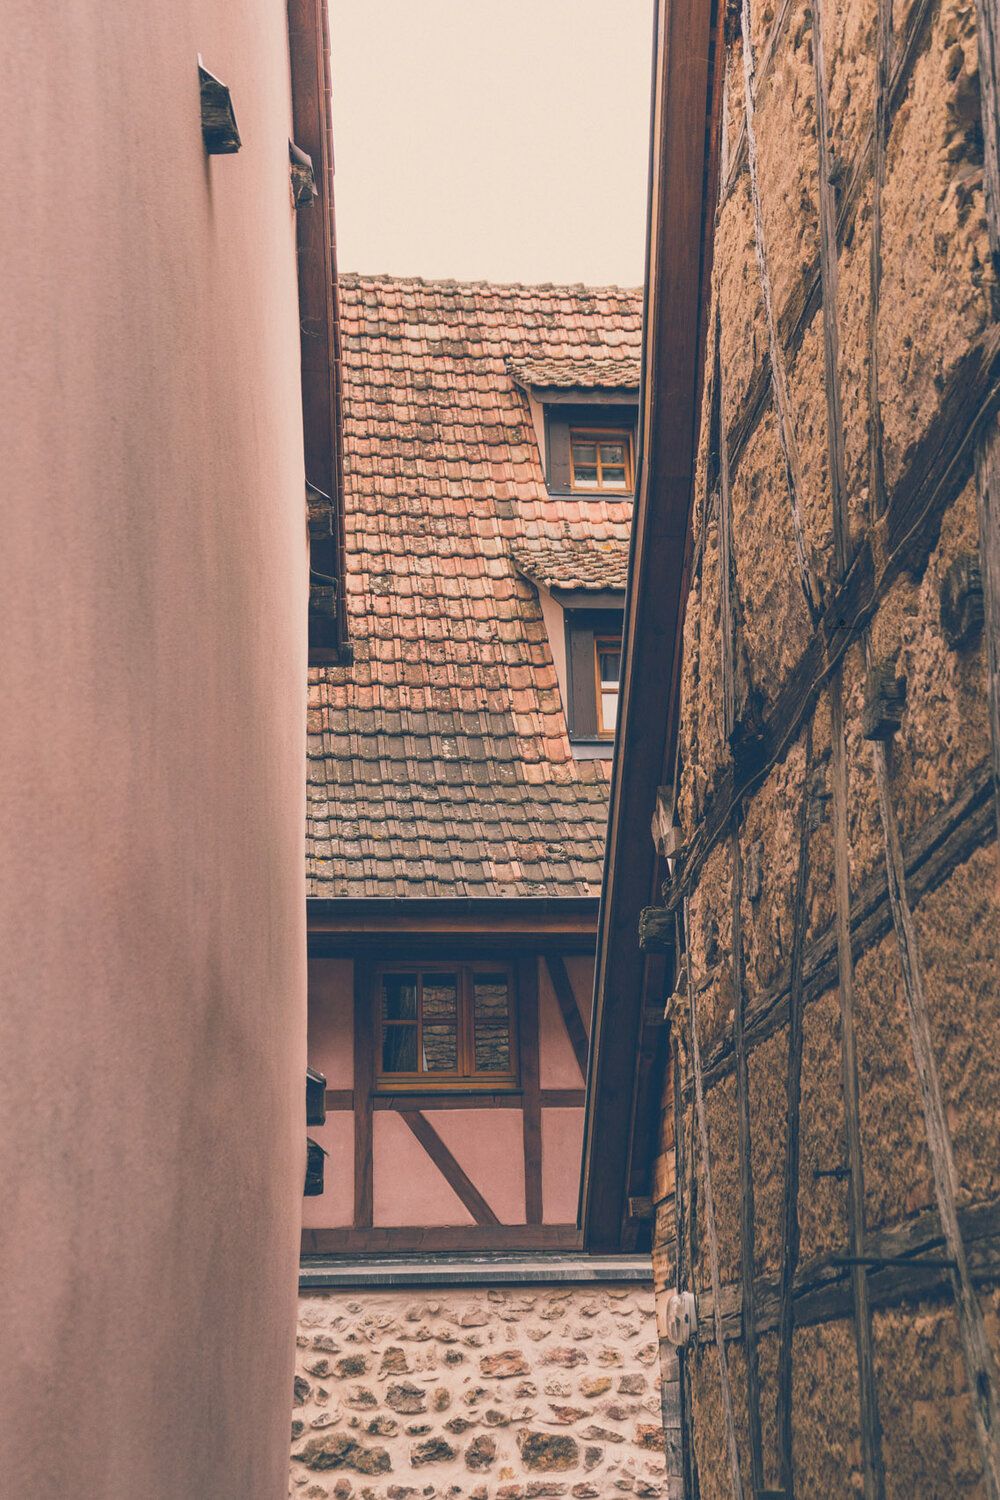 Peach-colored houses in Eguisheim